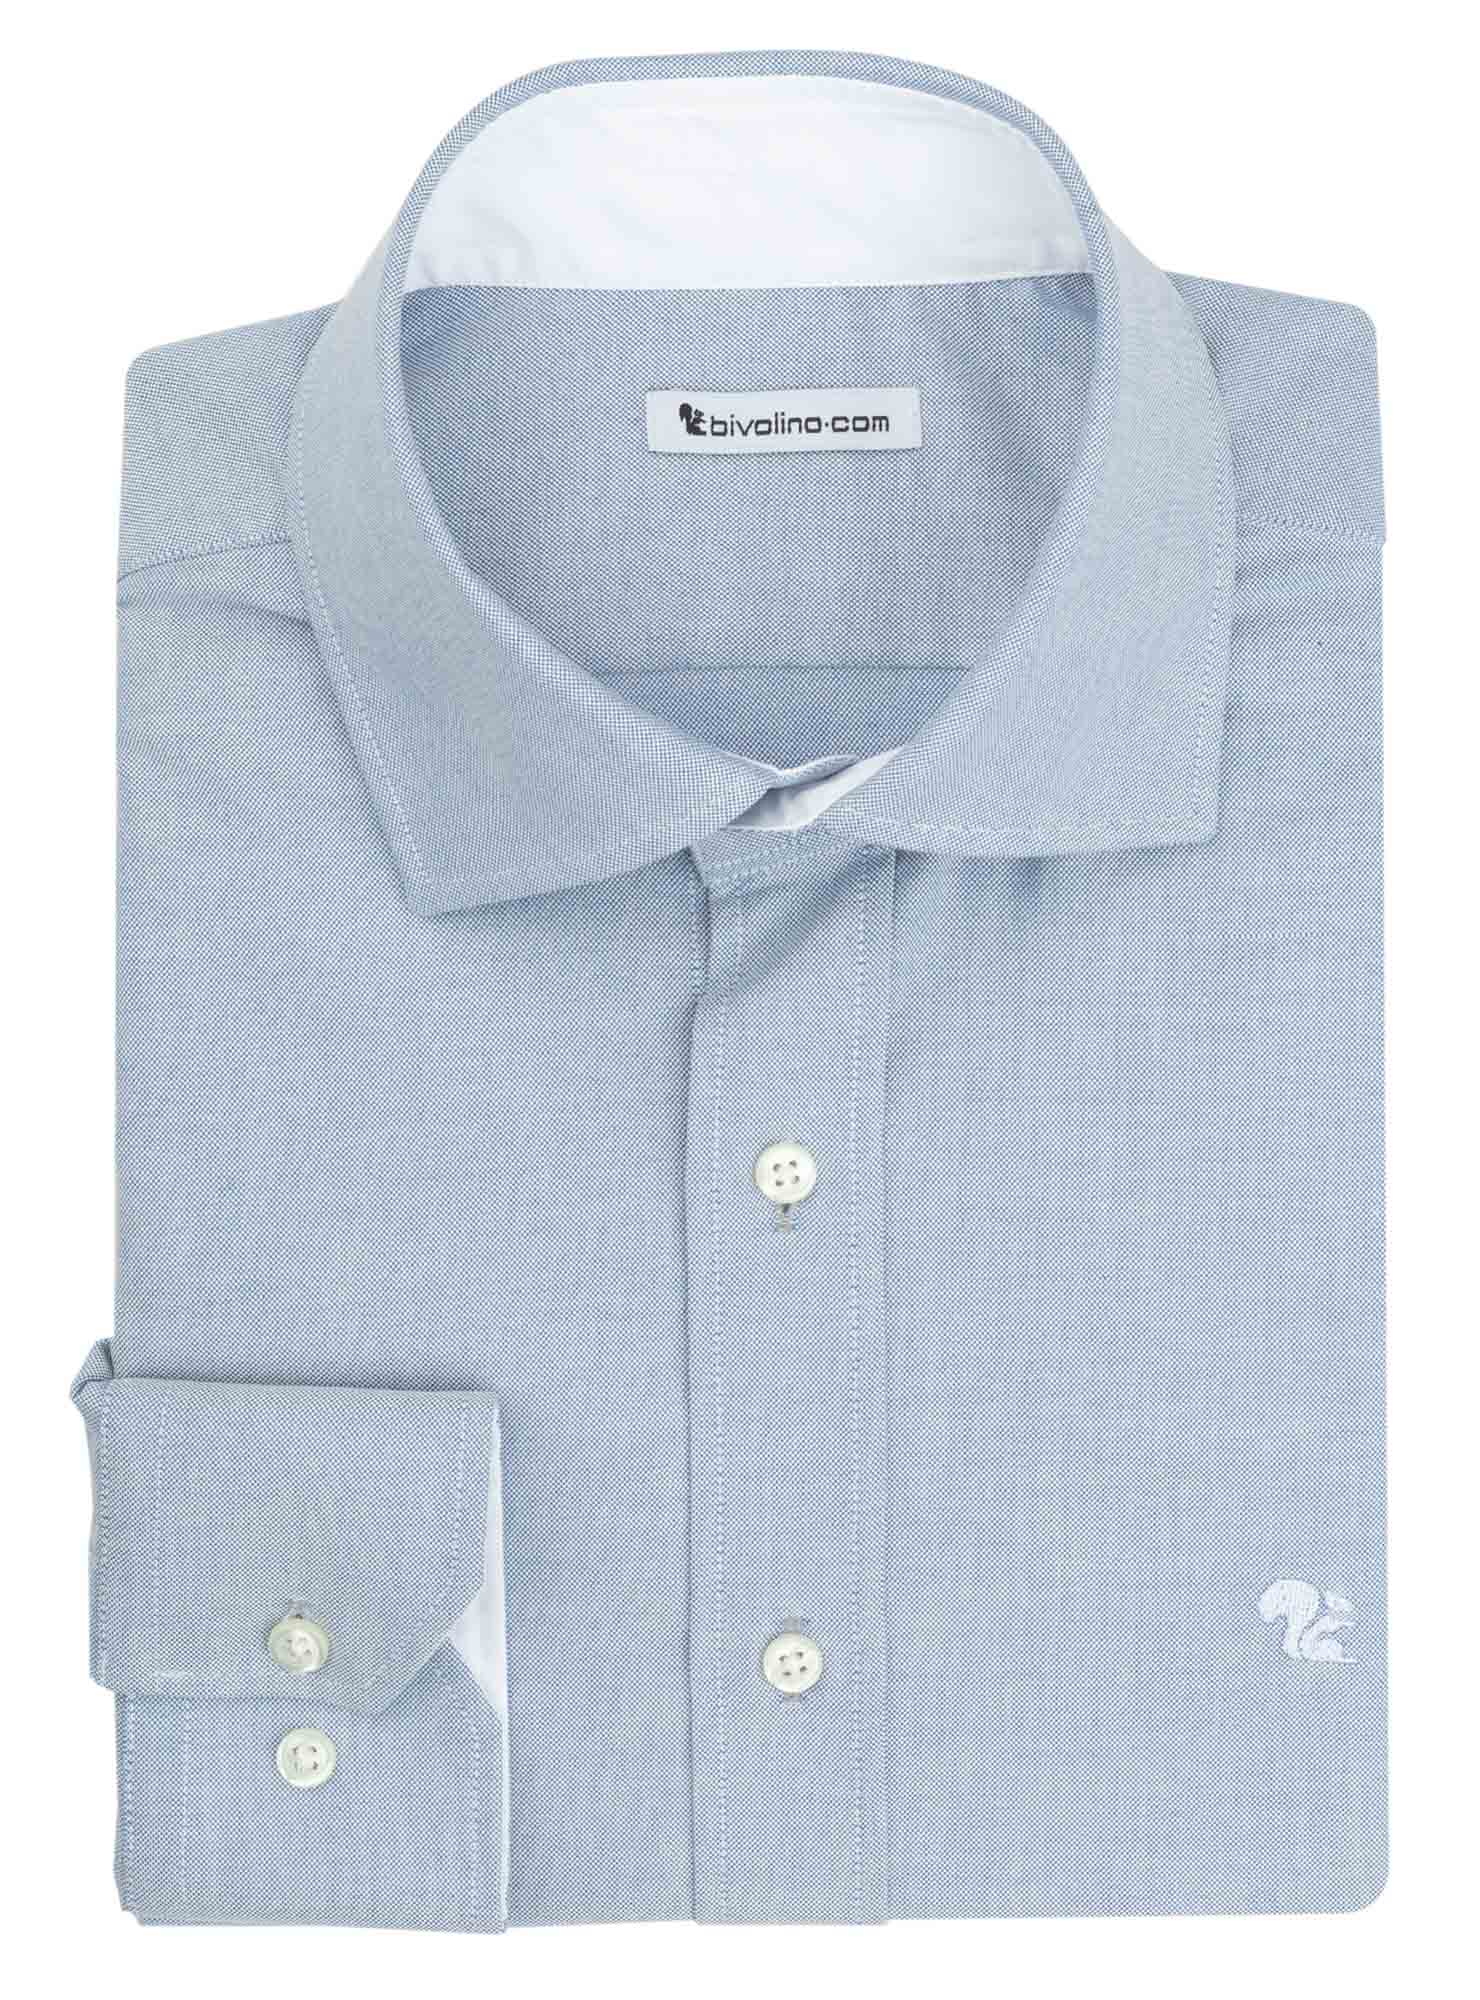 BOLOGNA - Camisa de hombre Thomas Mason 2 pliegues gruesos de invierno azul oxford - AMERICANOXFORD 7